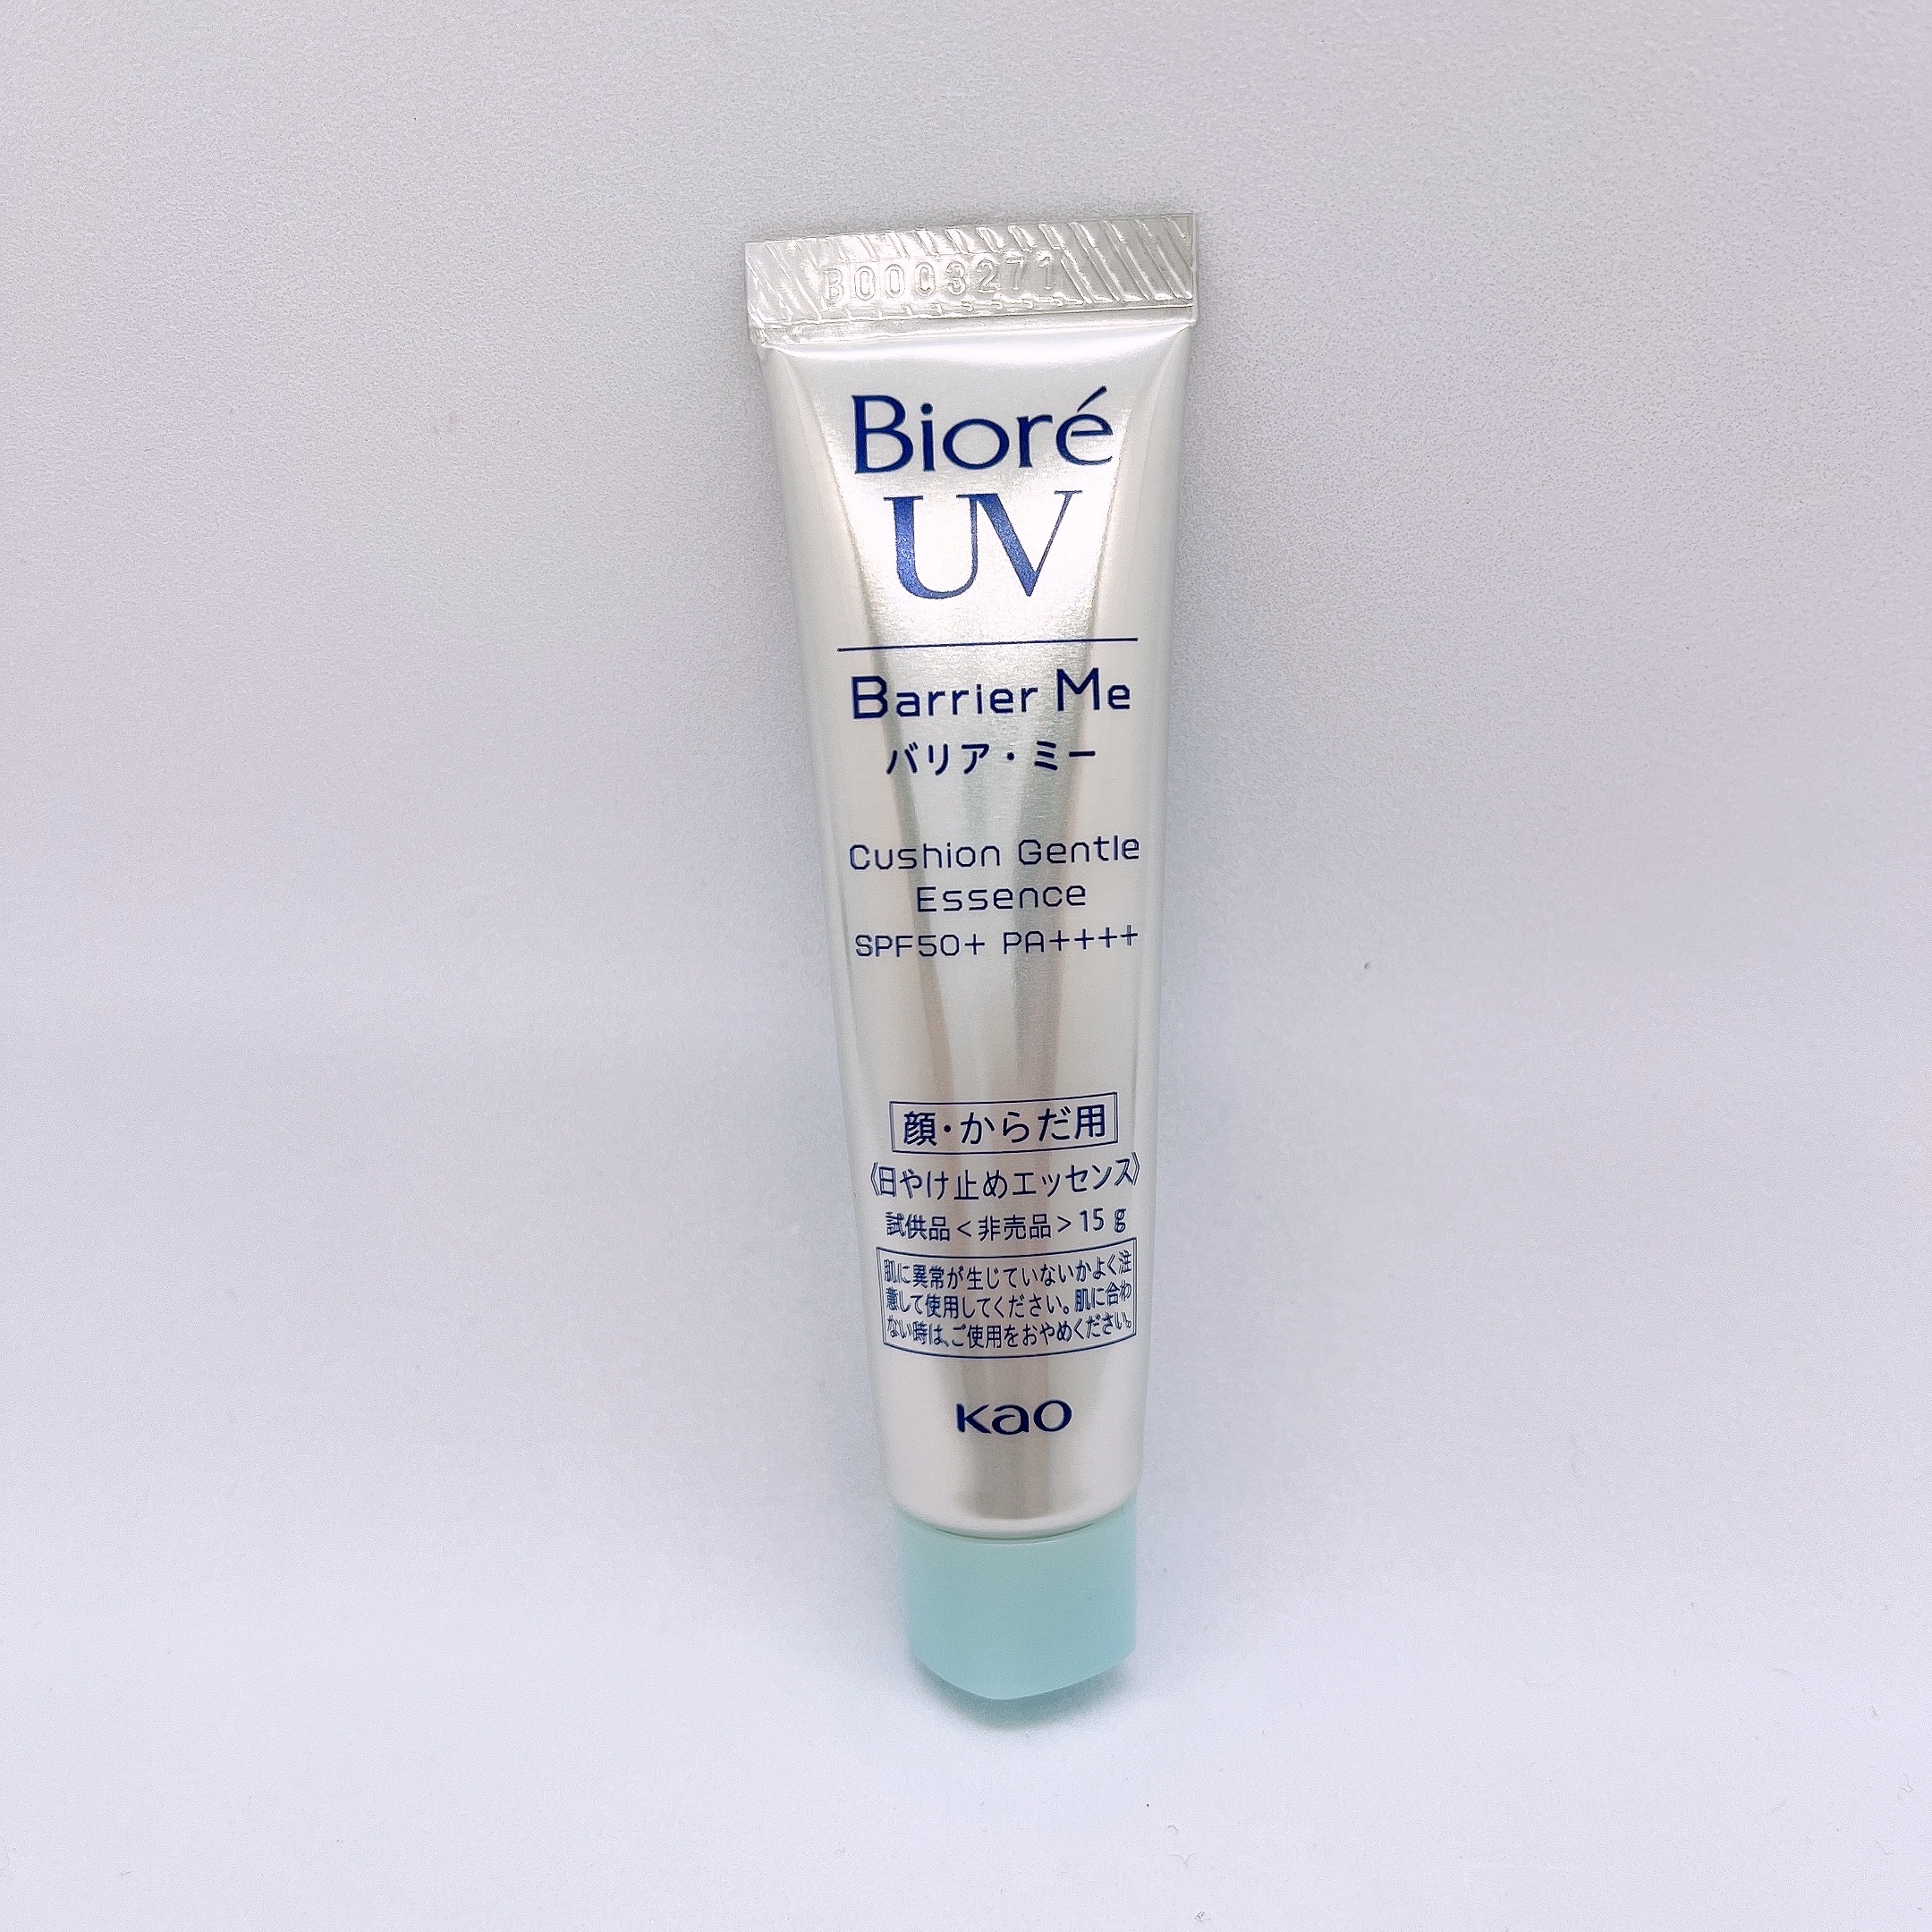 Bioré(ビオレ) UV バリア・ミー クッションジェントルエッセンスの良い点・メリットに関するまりたそさんの口コミ画像3